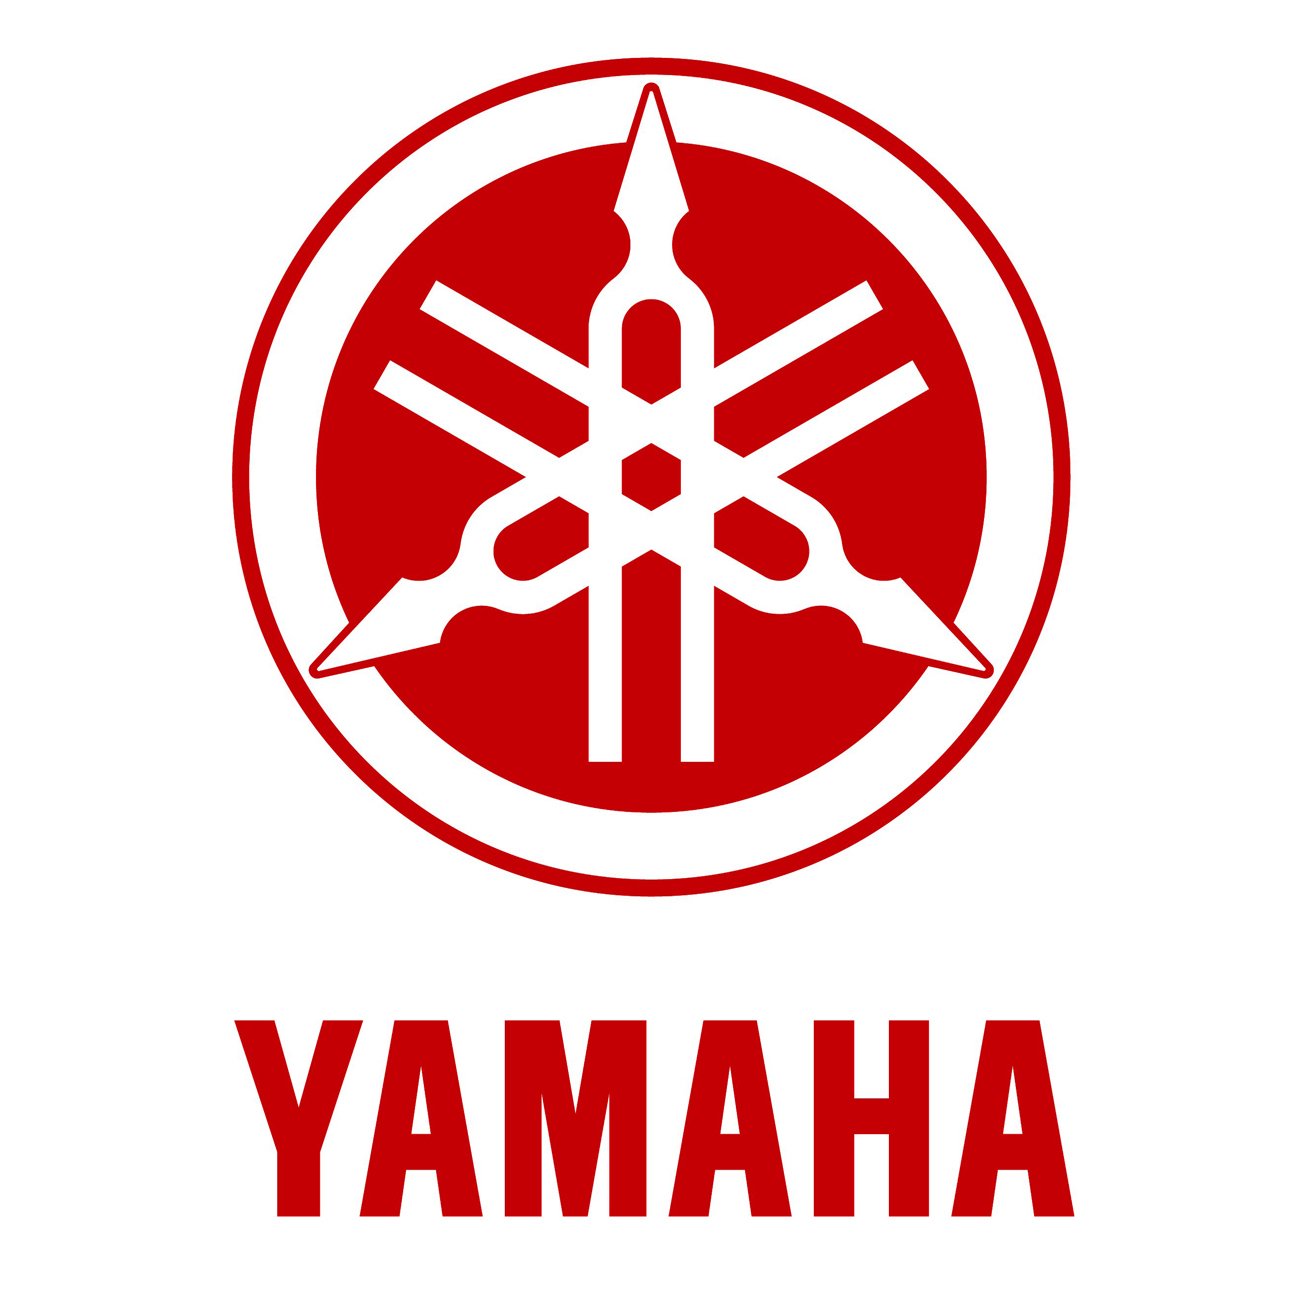 Yamaha logo : histoire, signification et évolution, symbole